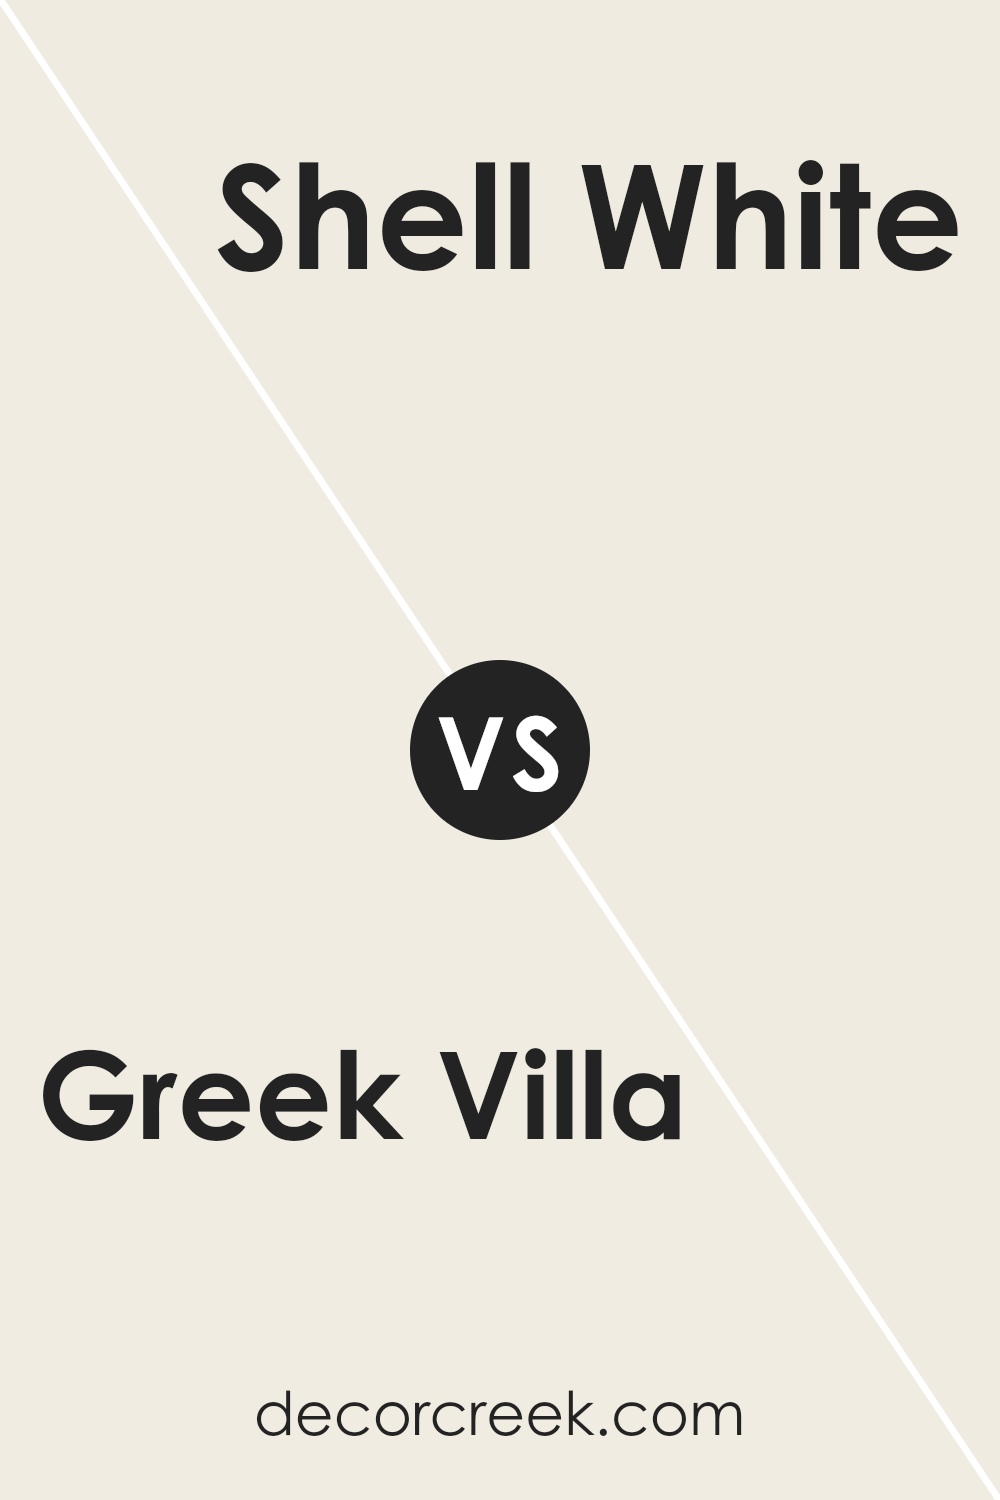 greek_villa_sw_7551_vs_shell_white_sw_8917